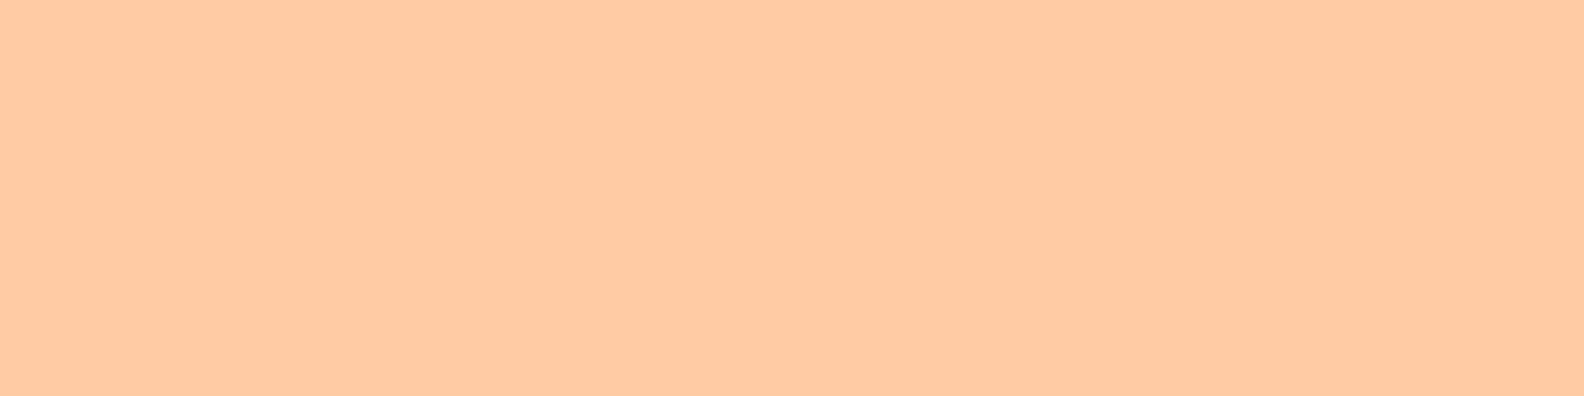 1584x396 Peach Crayola Solid Color Background